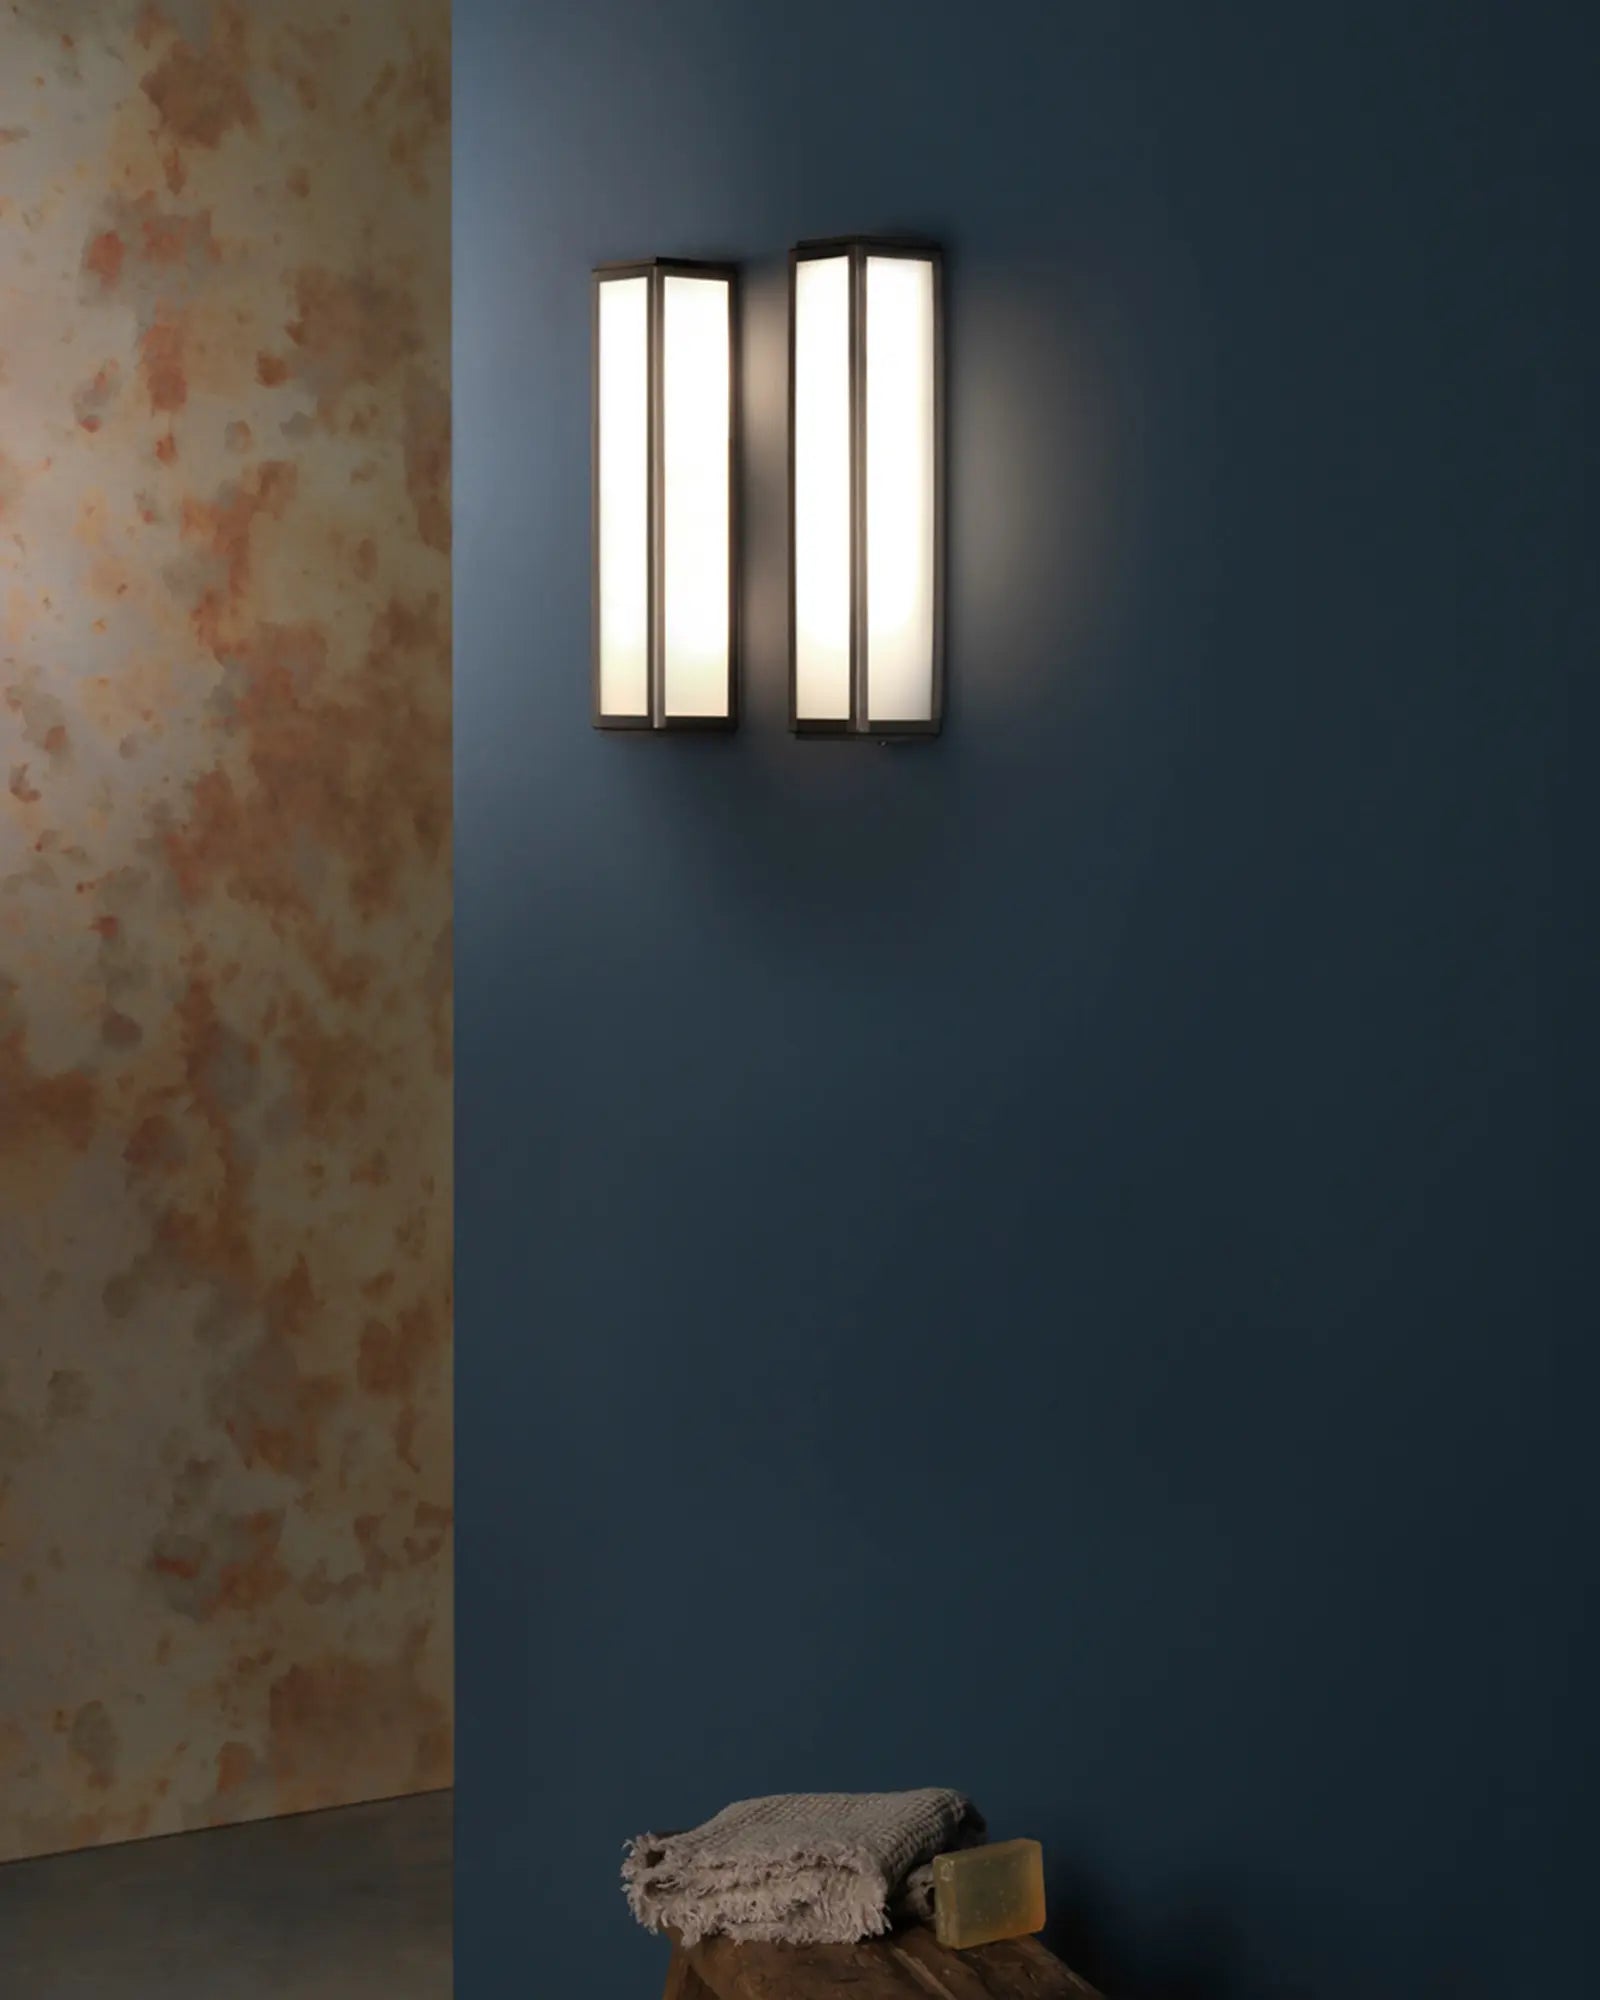 Mashiko metal and glass contemporary bathroom wall light hallway